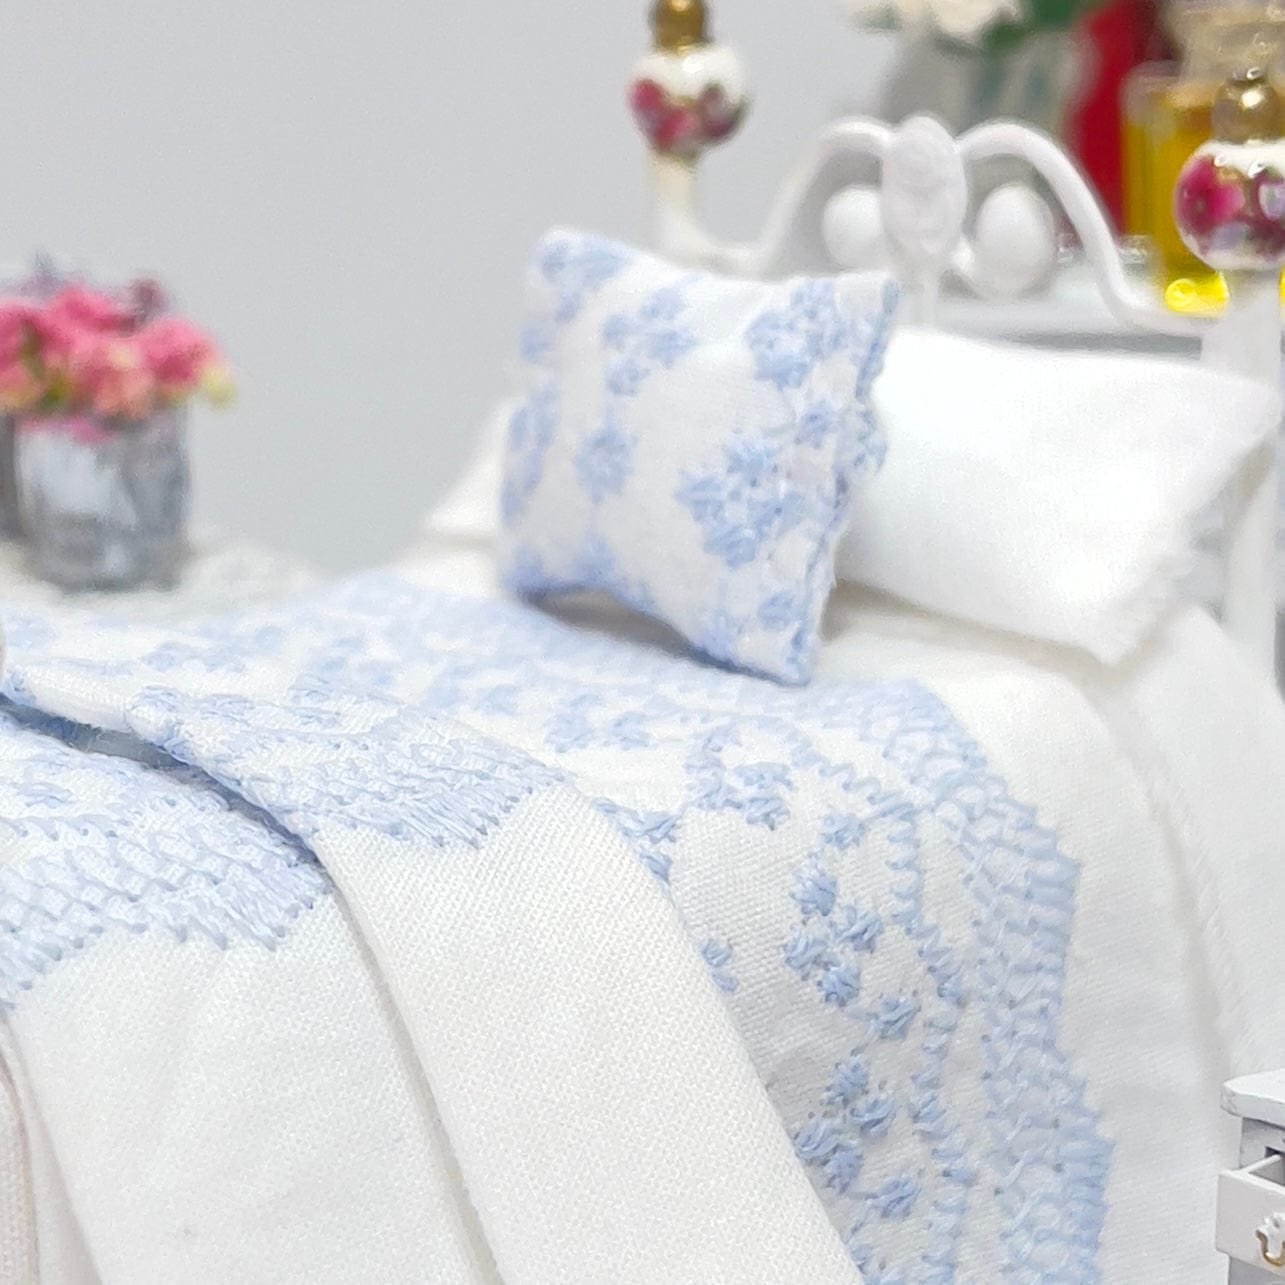 CHANTALLENA Dollhouse Accessories 1:24 Scale | Five Piece Blue Embroidered Cotton Dollhouse Bedding Set | Petite Abigail